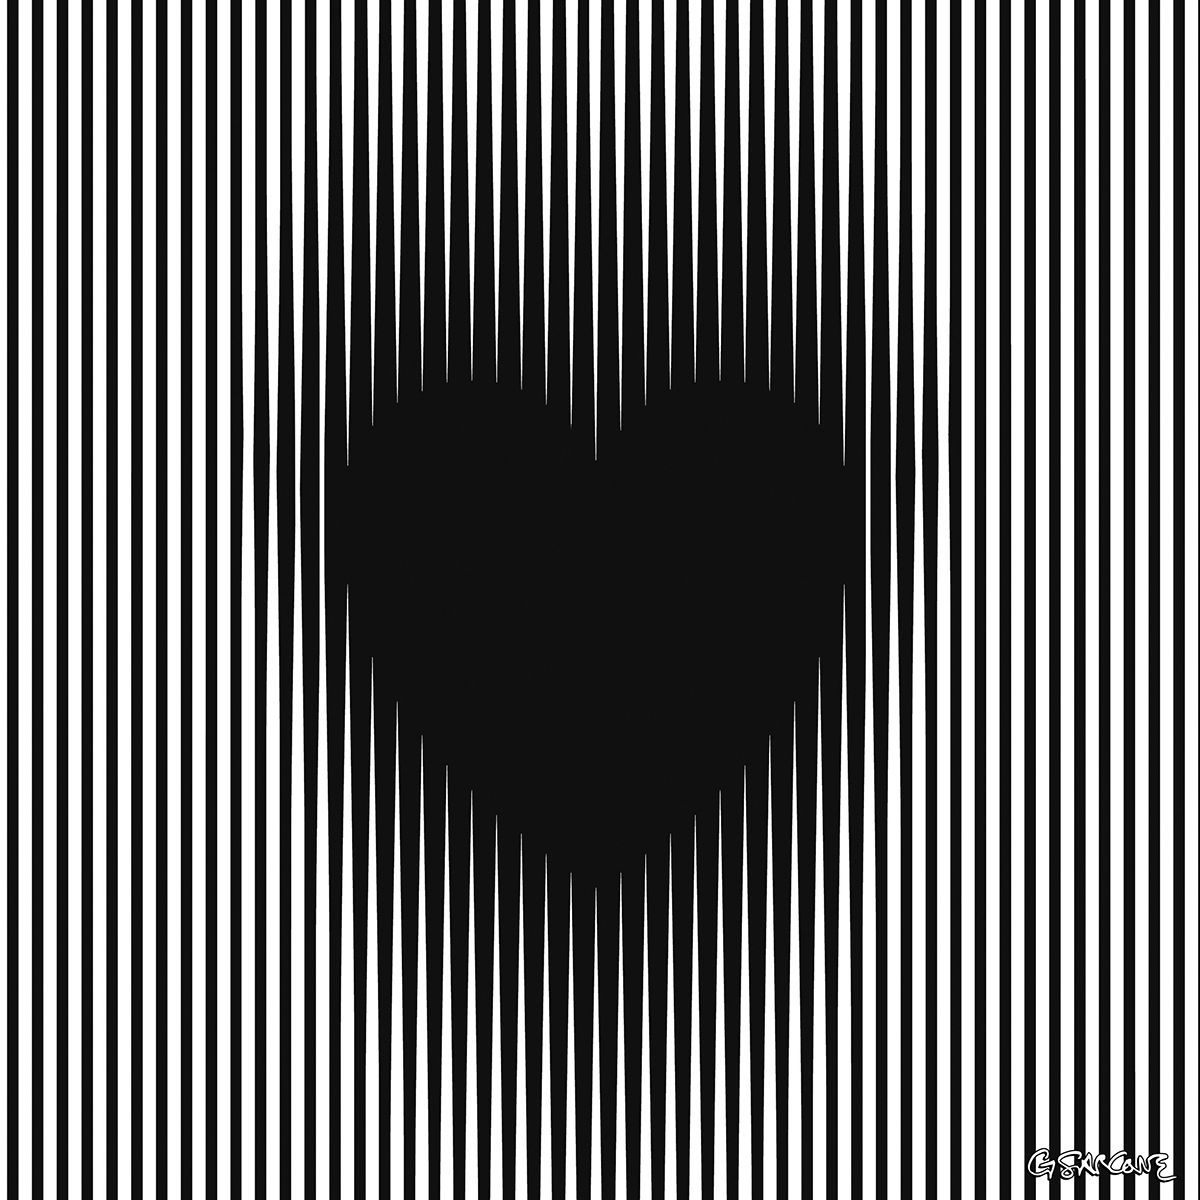 autokinetic illusion self-moving visual illusion optical effect best illusion of gianni sarcone